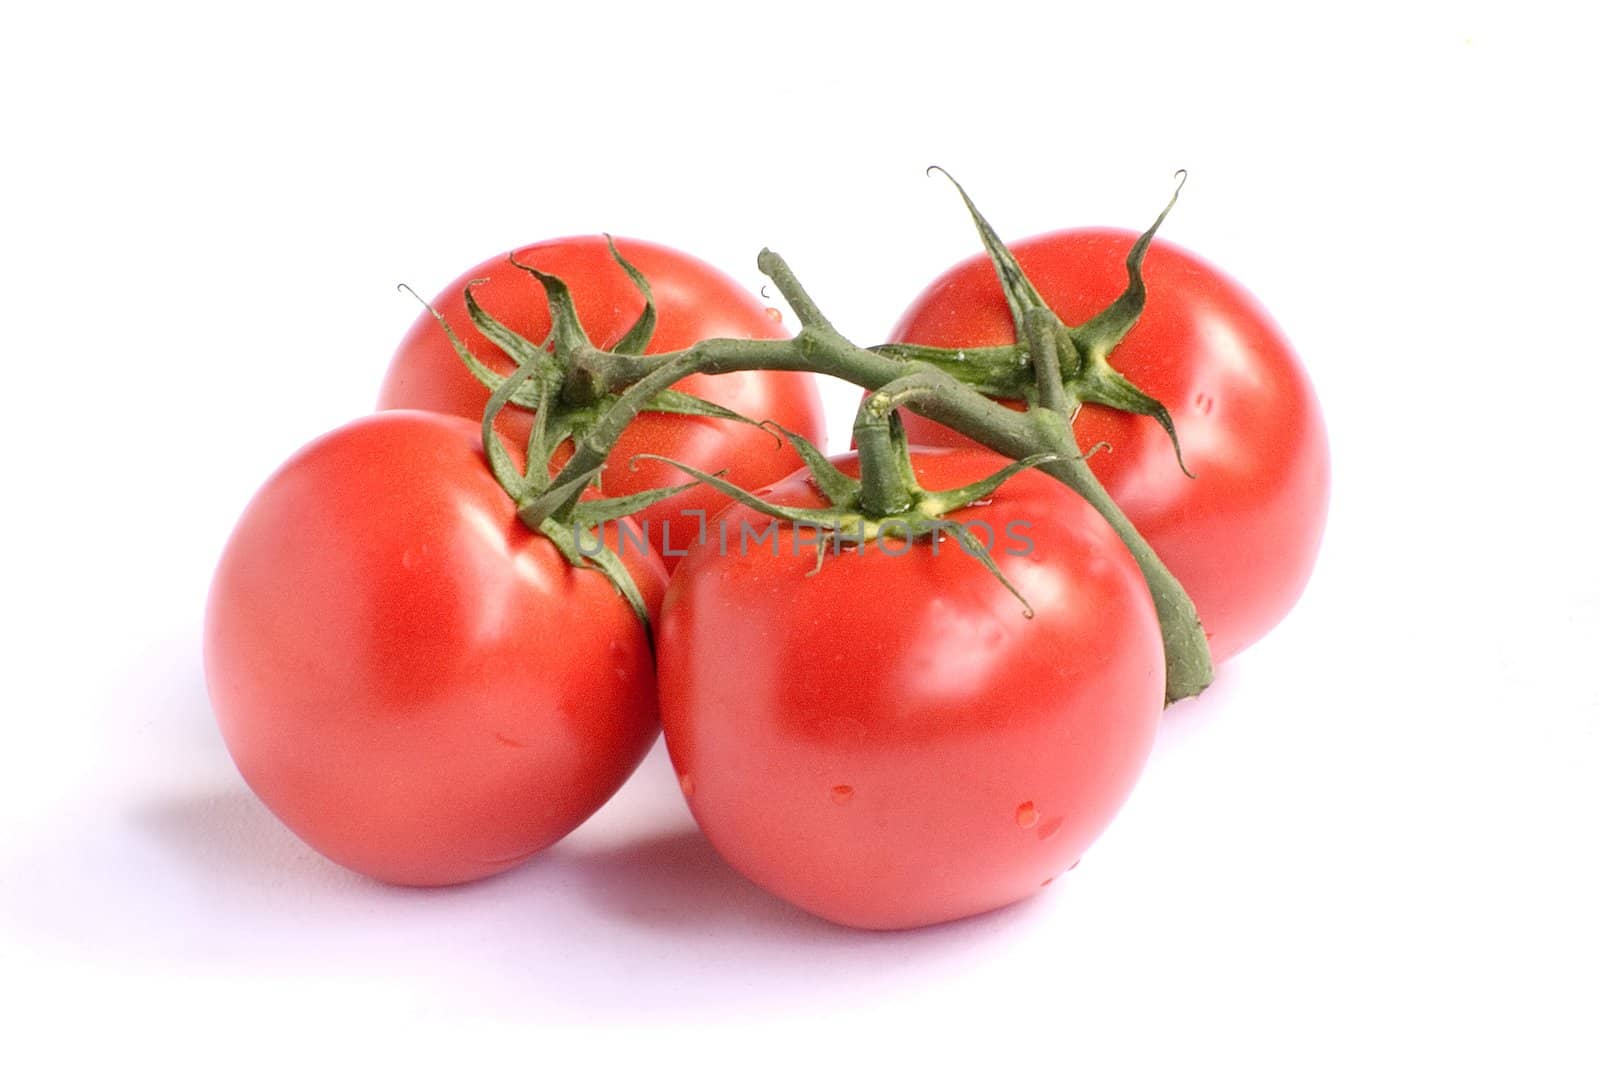 Tomatoes by miradrozdowski